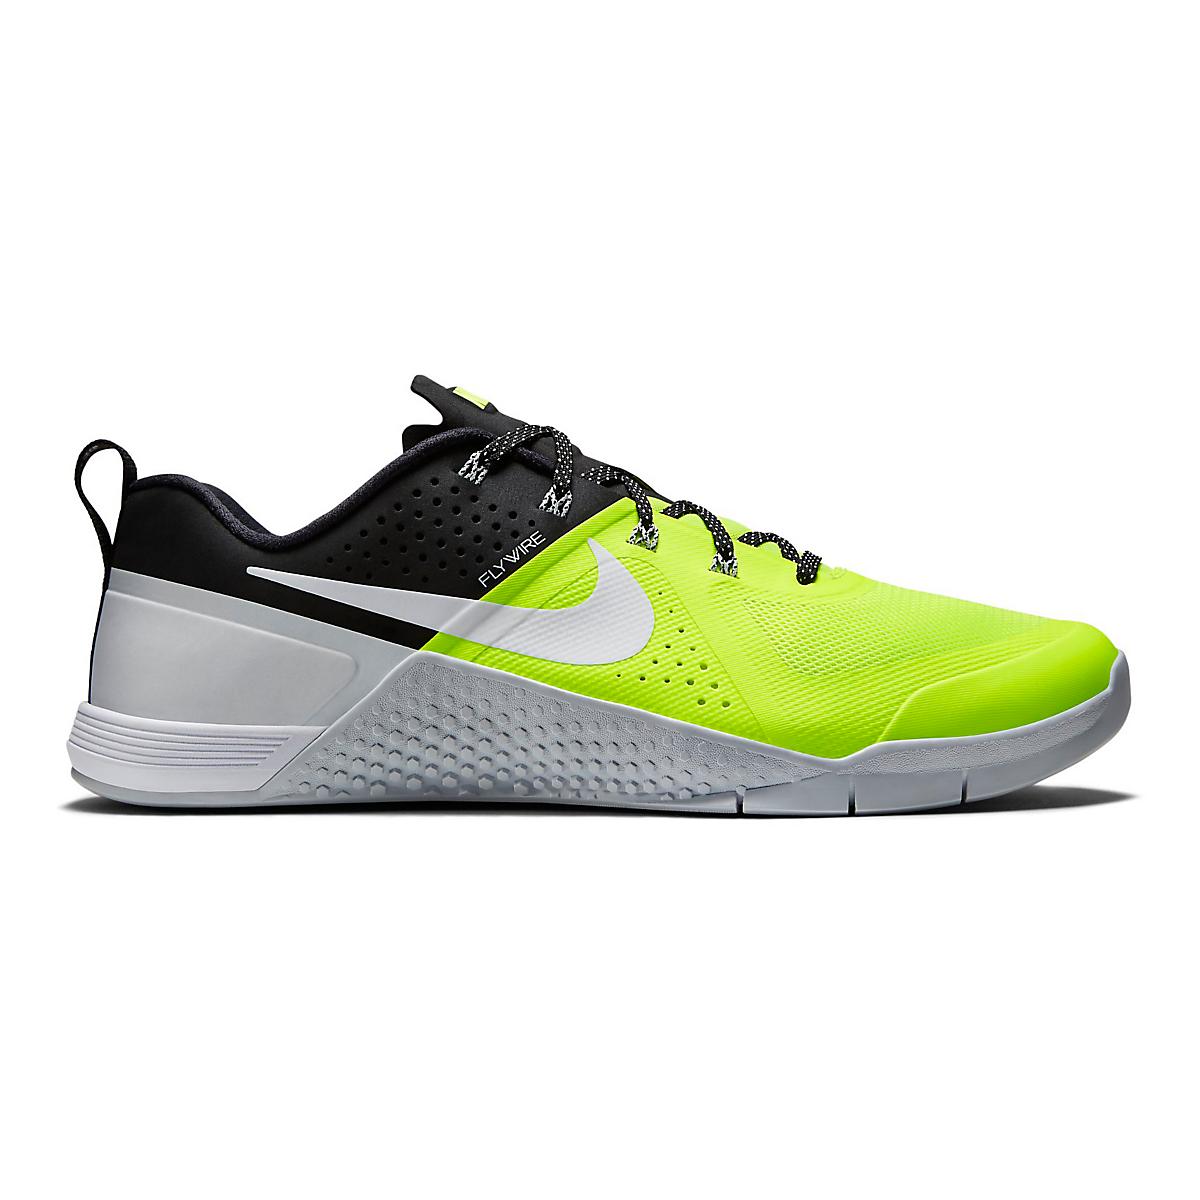 Mens Nike MetCon 1 Cross Training Shoe at Road Runner Sports